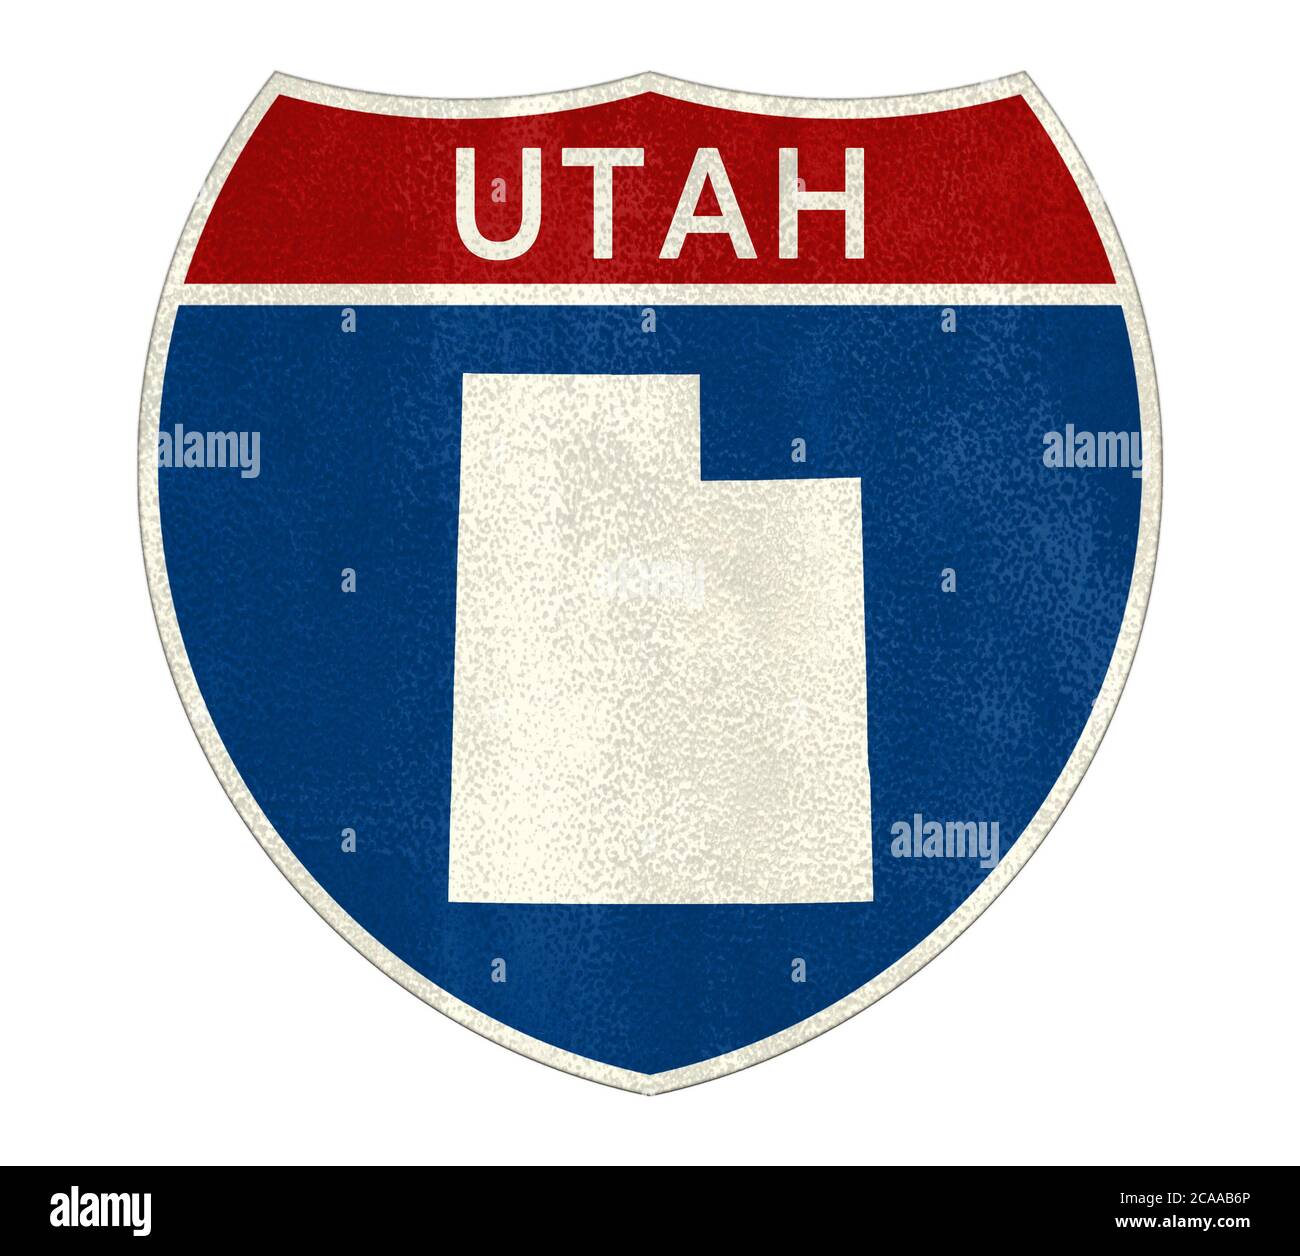 Utah Interstate road sign map Stock Photo